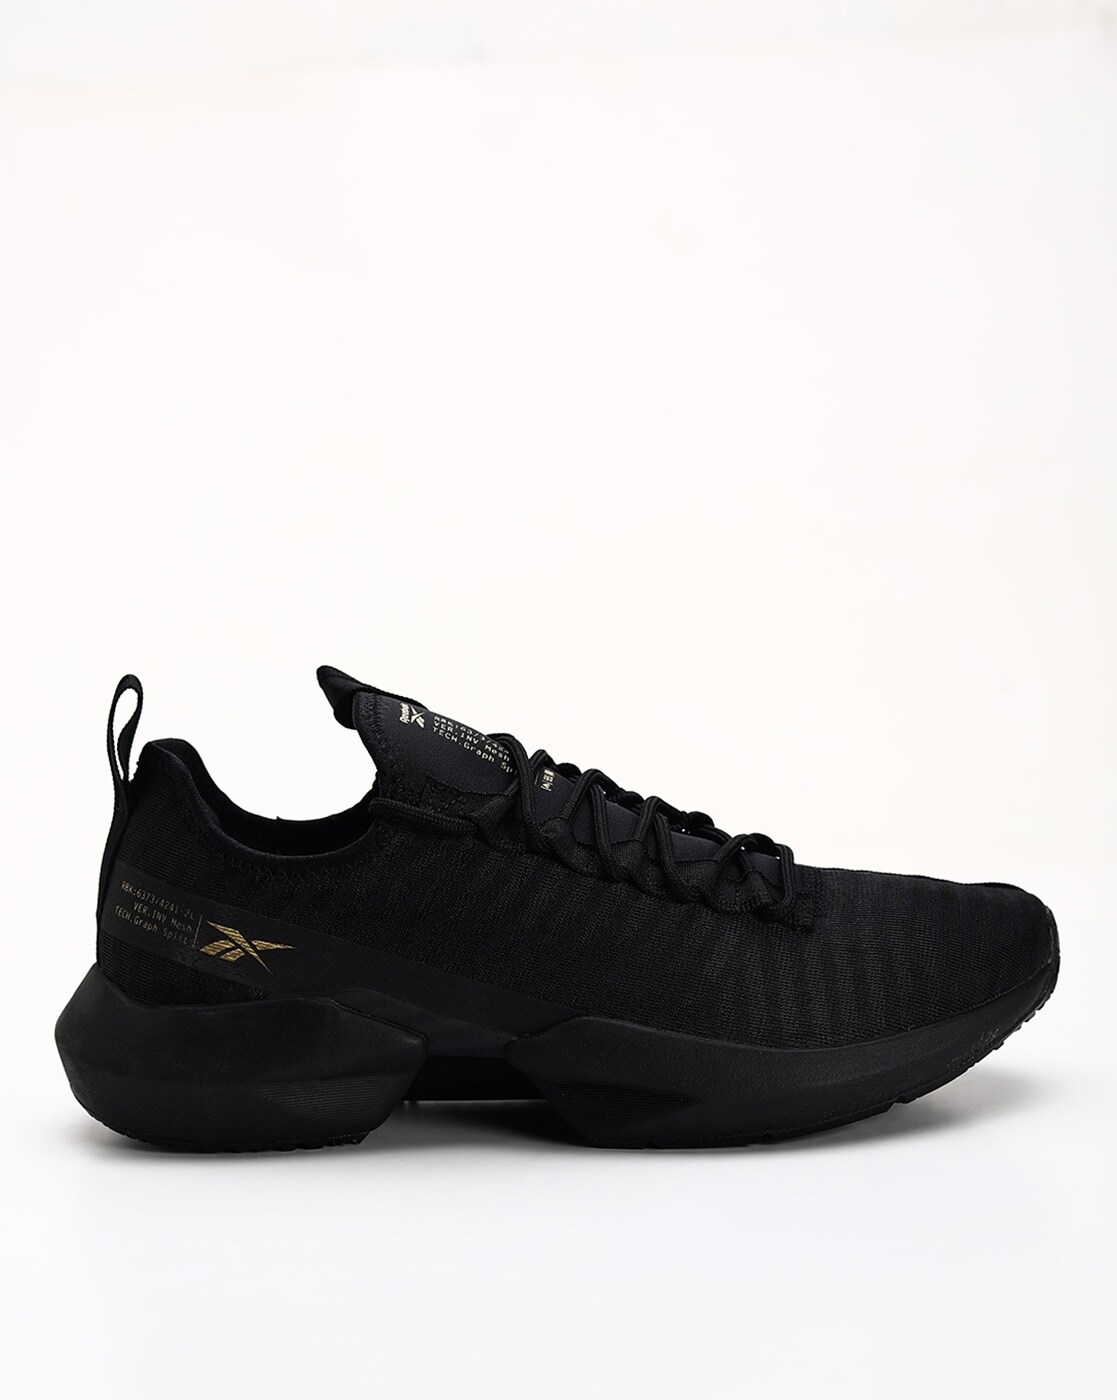 Black Sports Shoes for Men by Reebok 